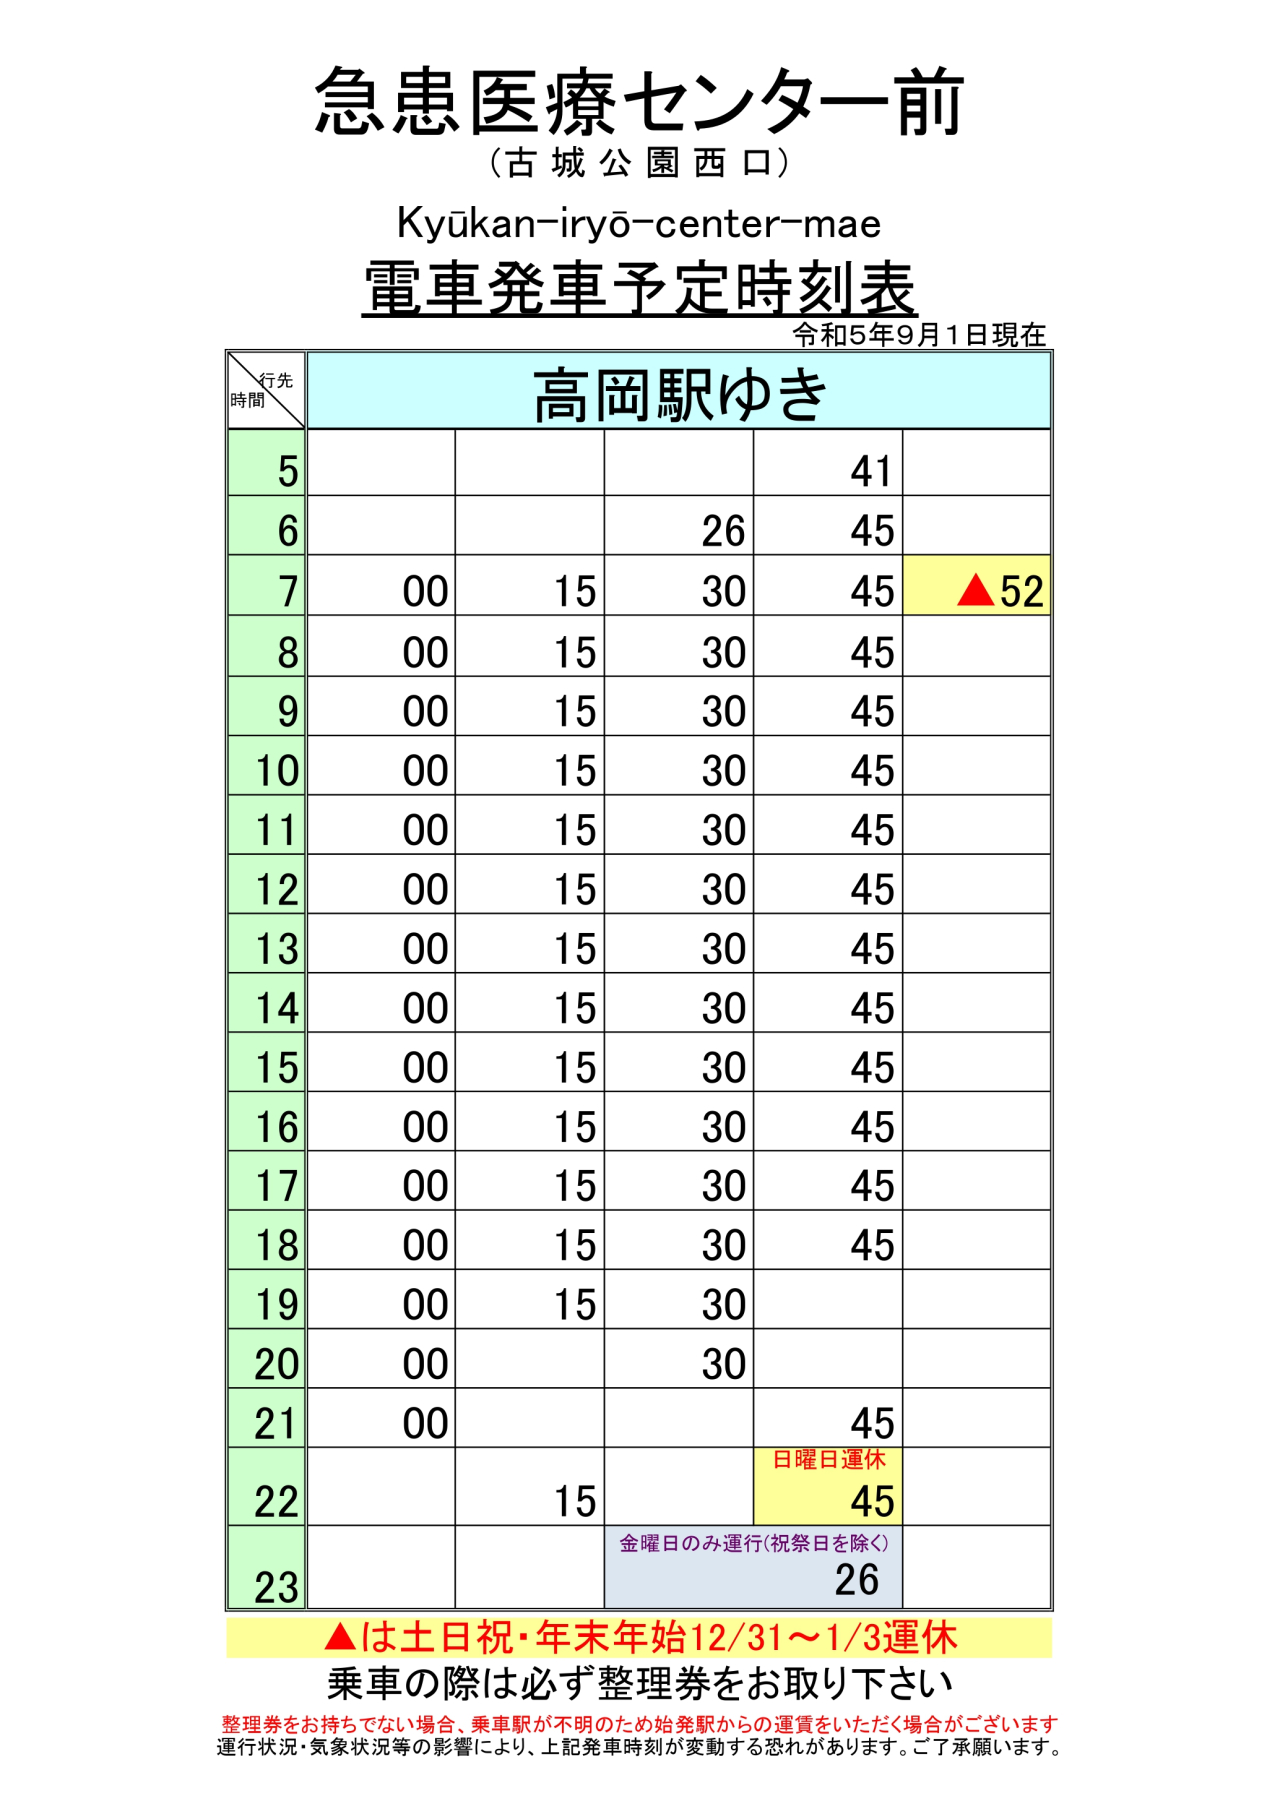 最新5.9.1急患医療(上り)_page-0001